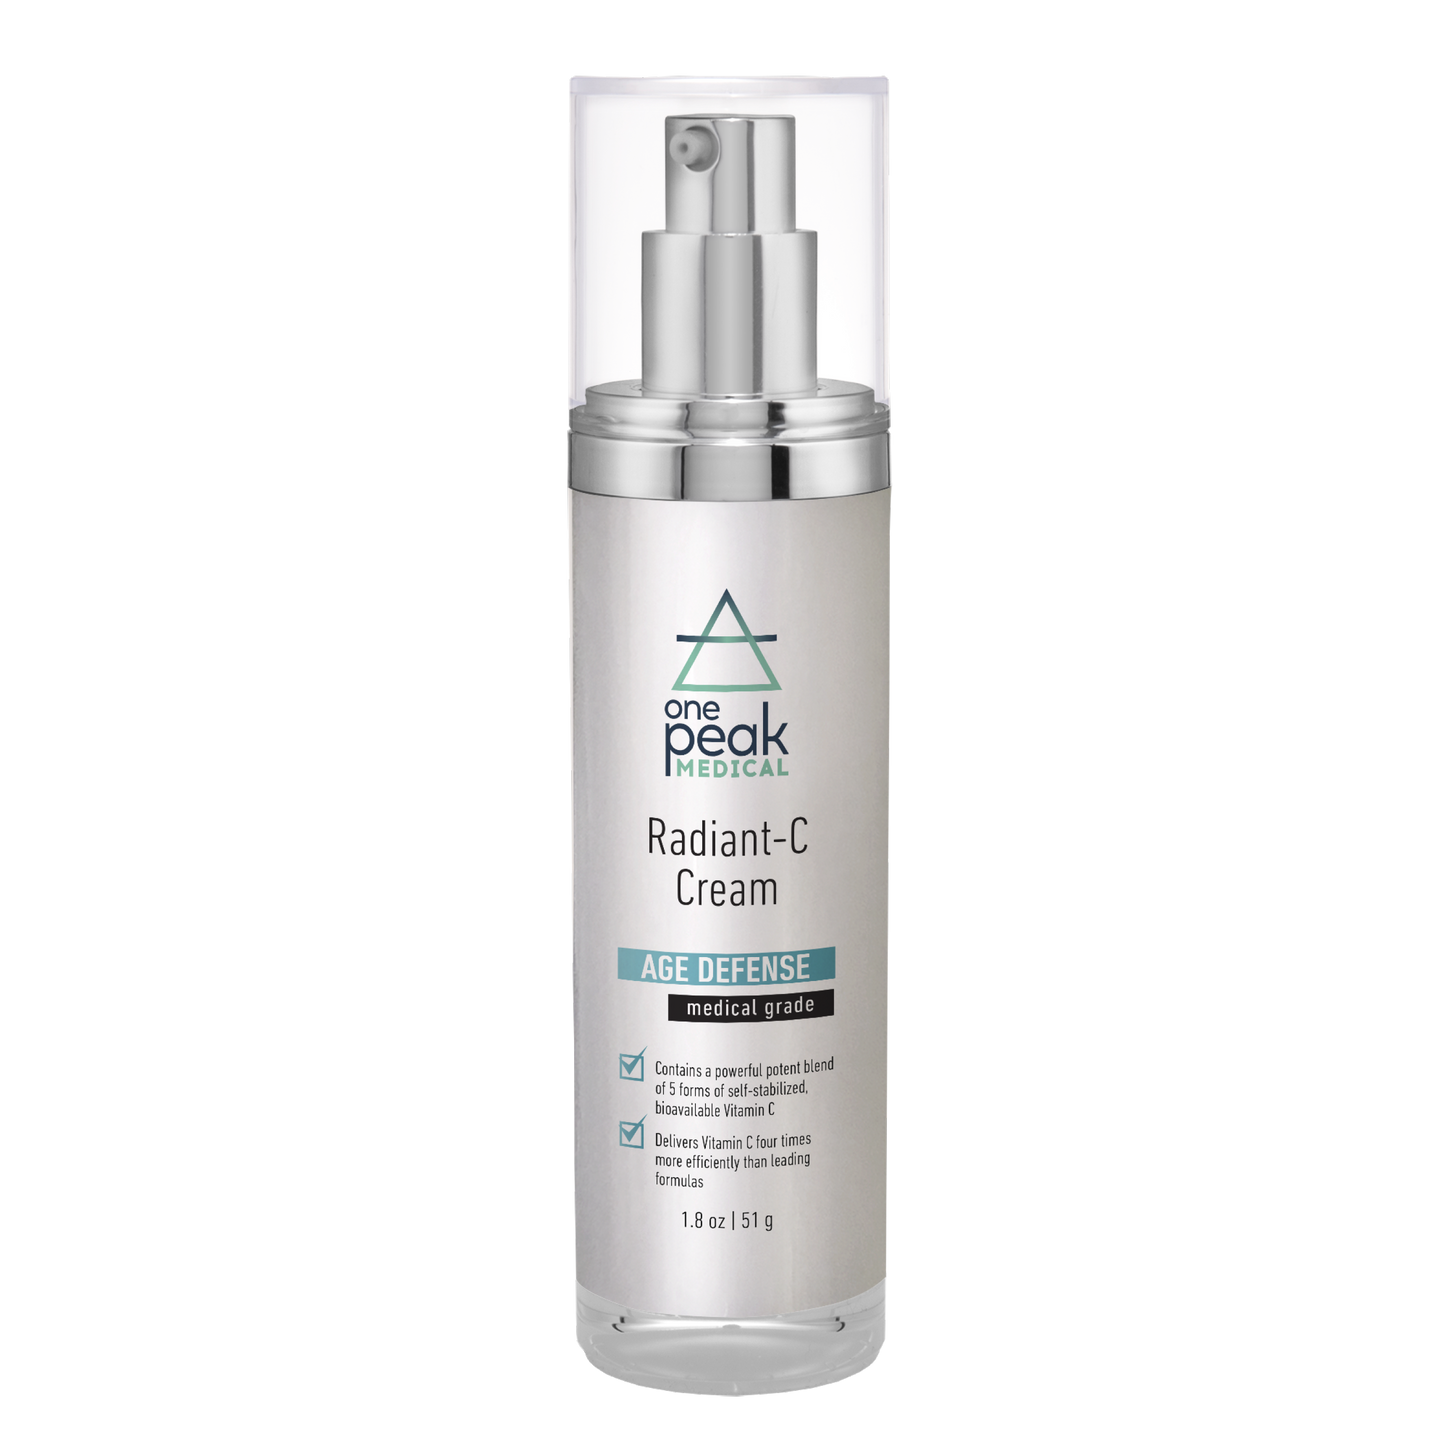 OnePeak Medical - Radiant-c cream tall grey bottle